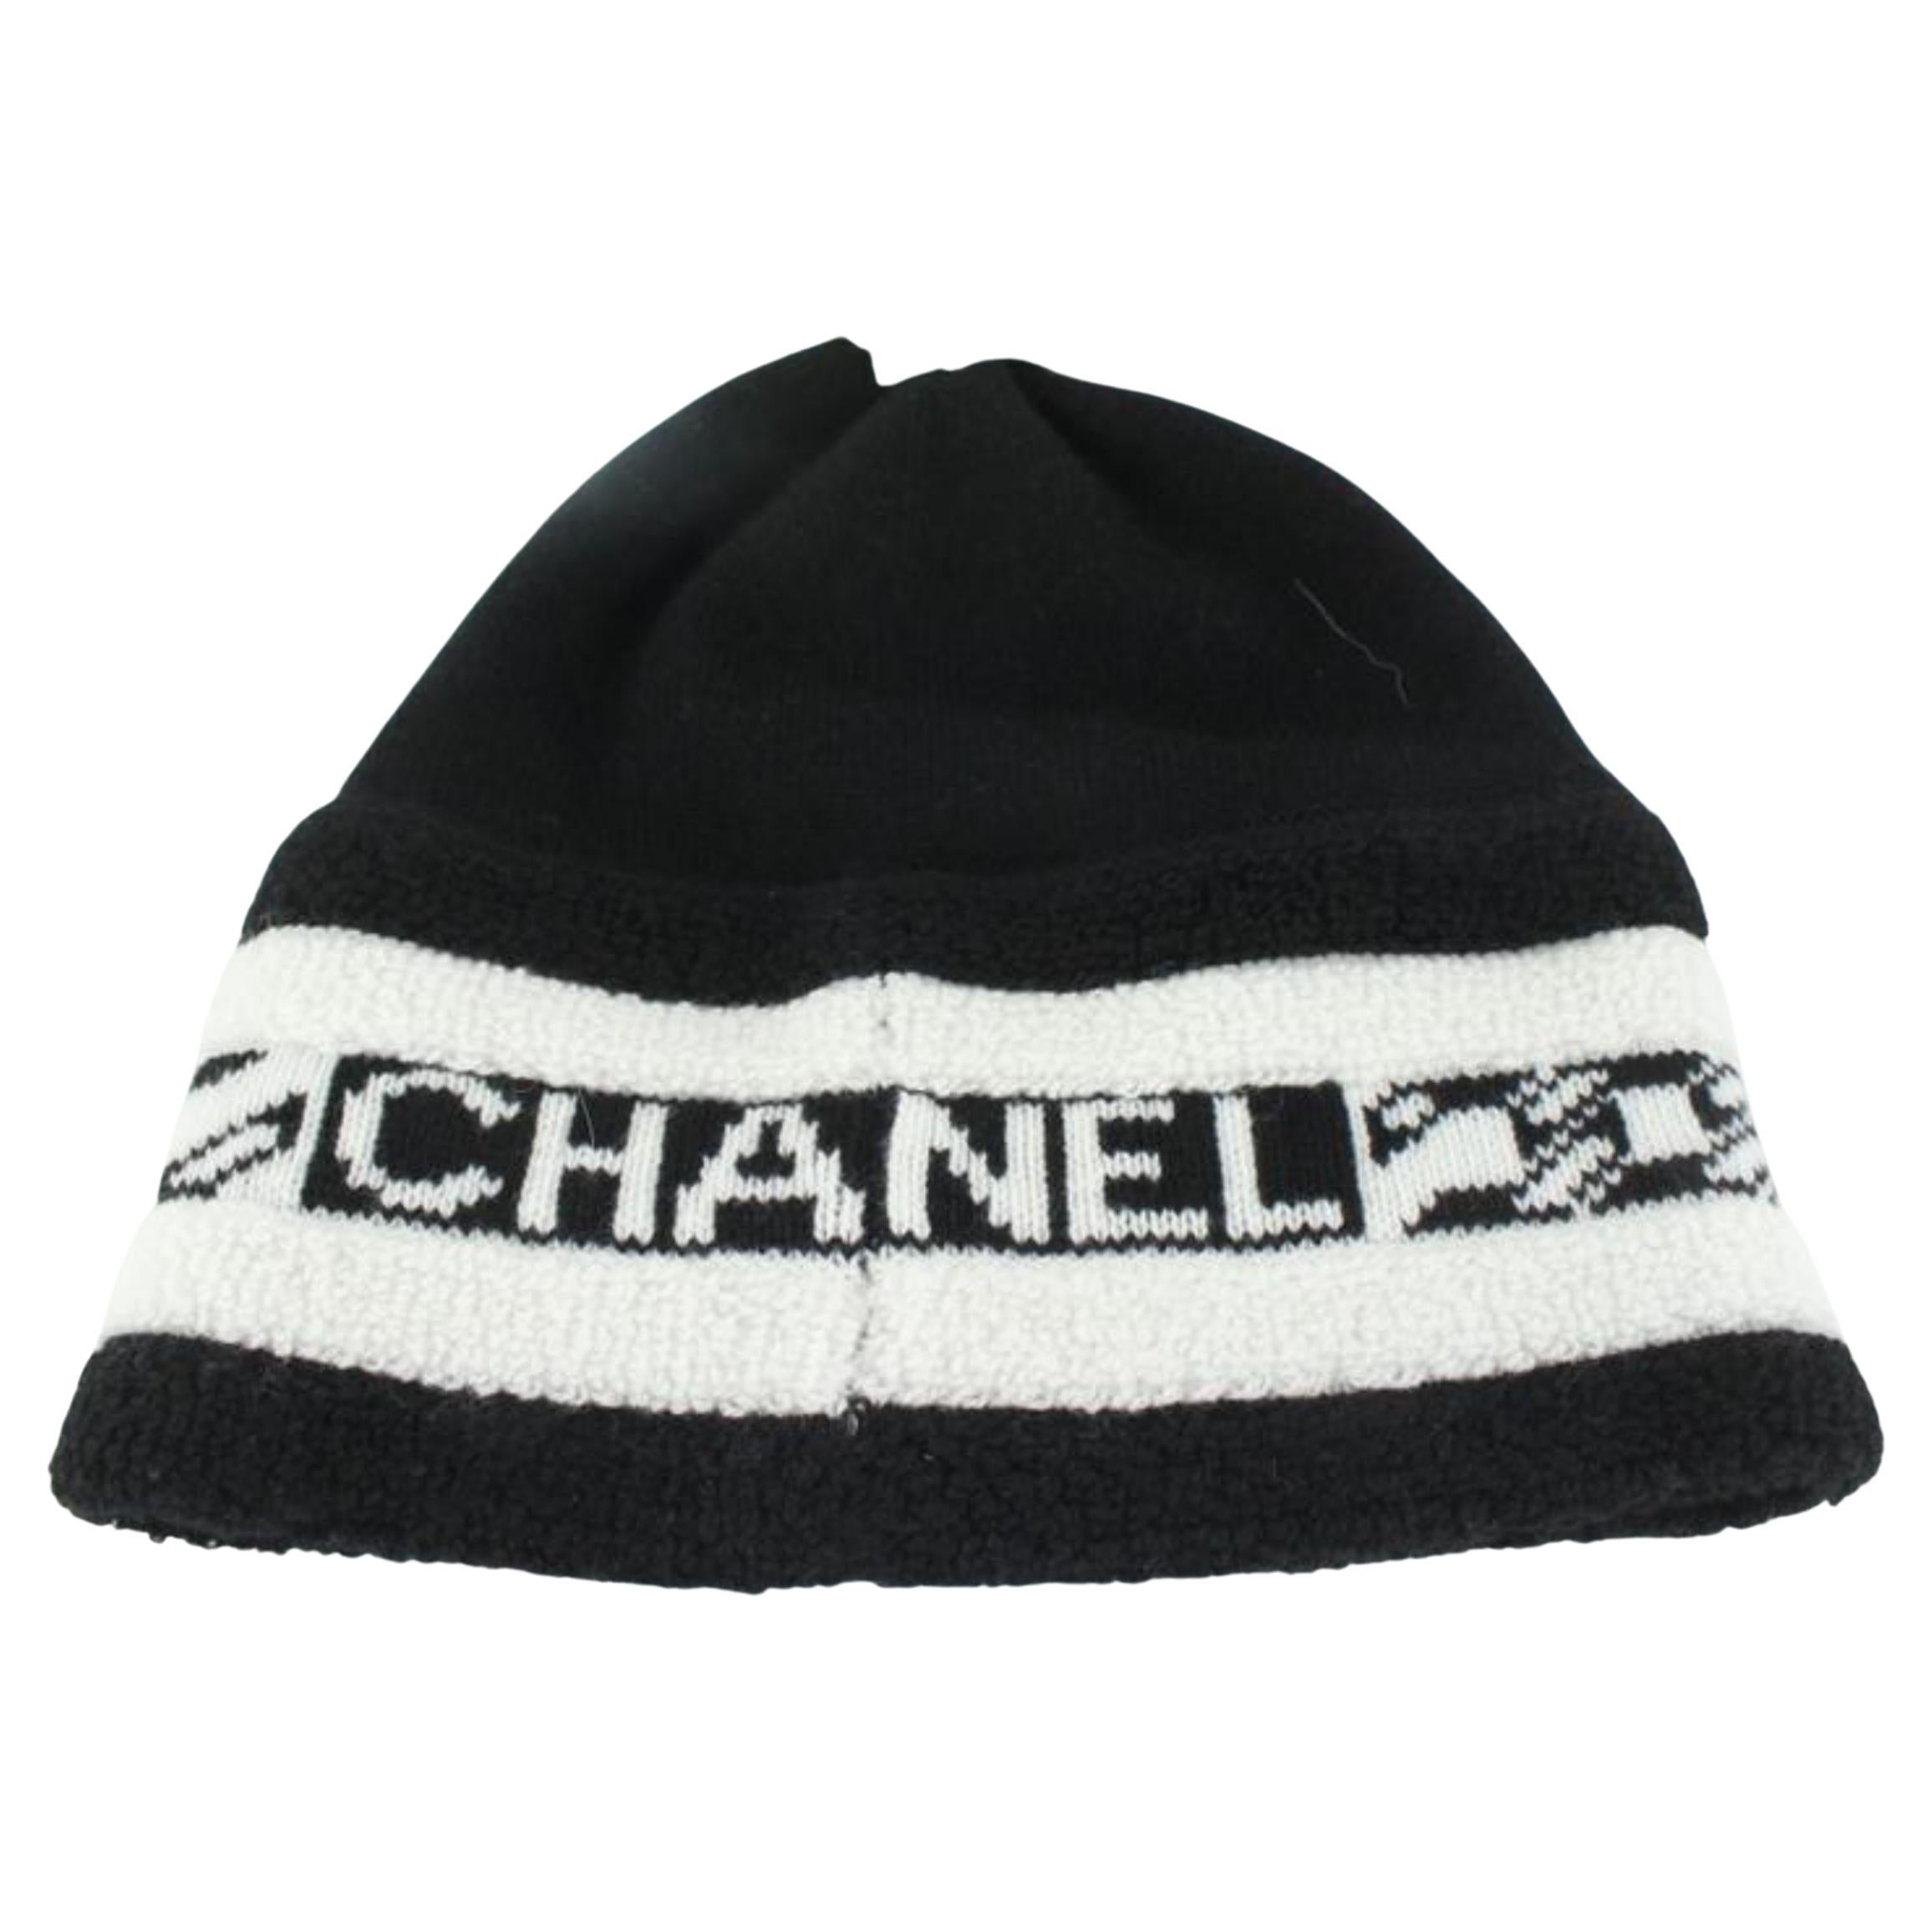 Chanel Black x White Cashmere Pom Pom Beanie Skull Cap Ski Hat 1213c5